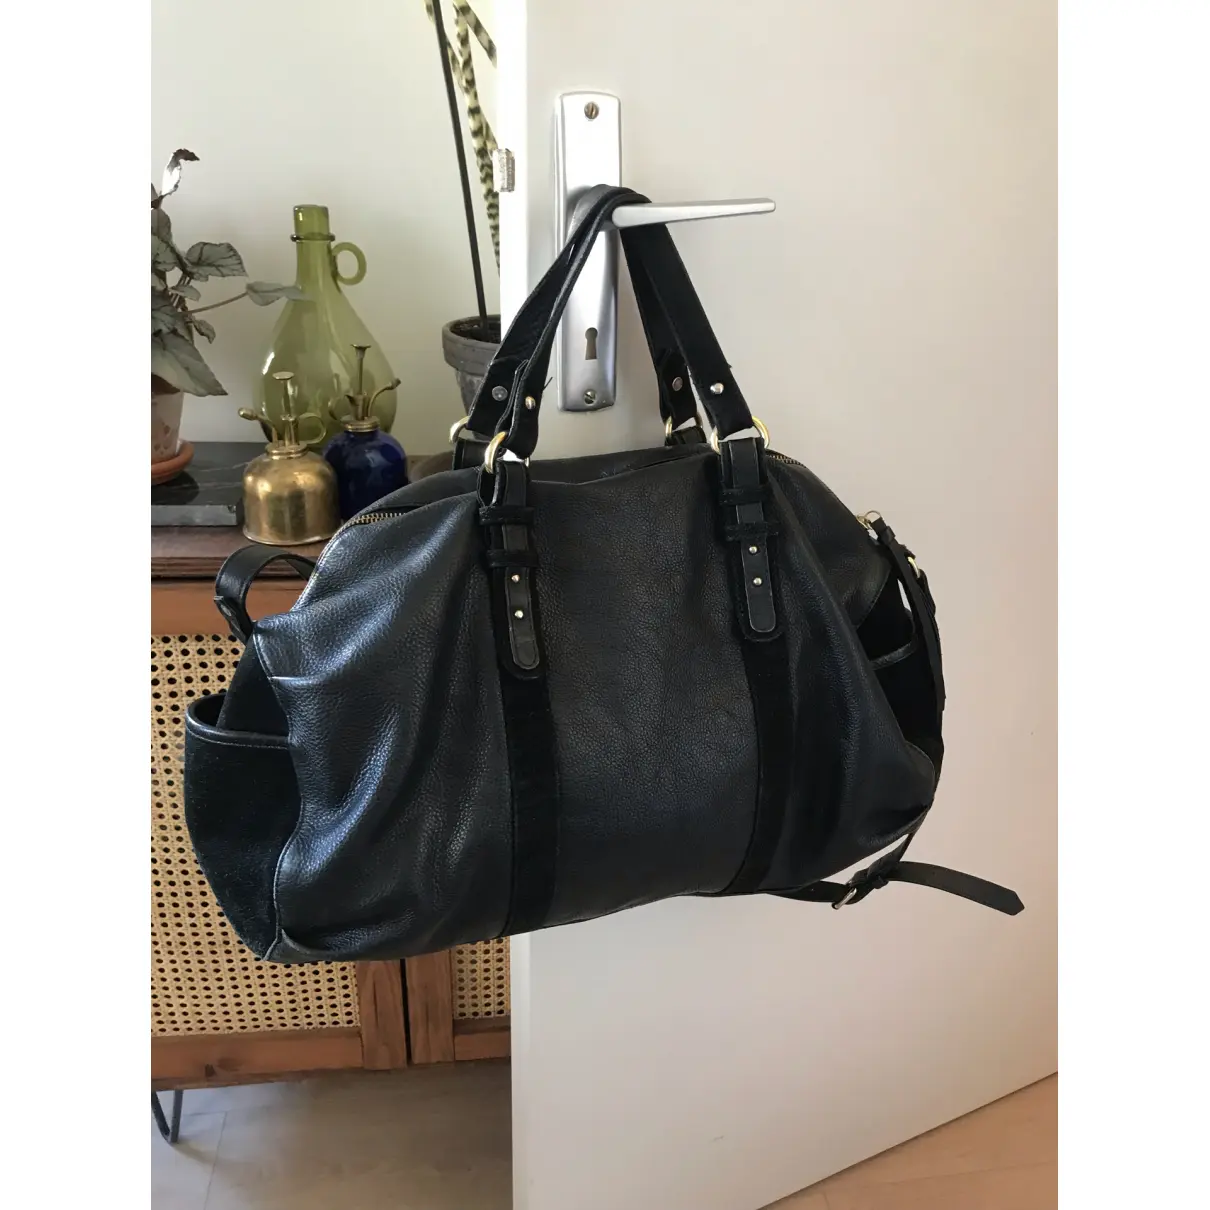 Buy Petite Mendigote Leather crossbody bag online